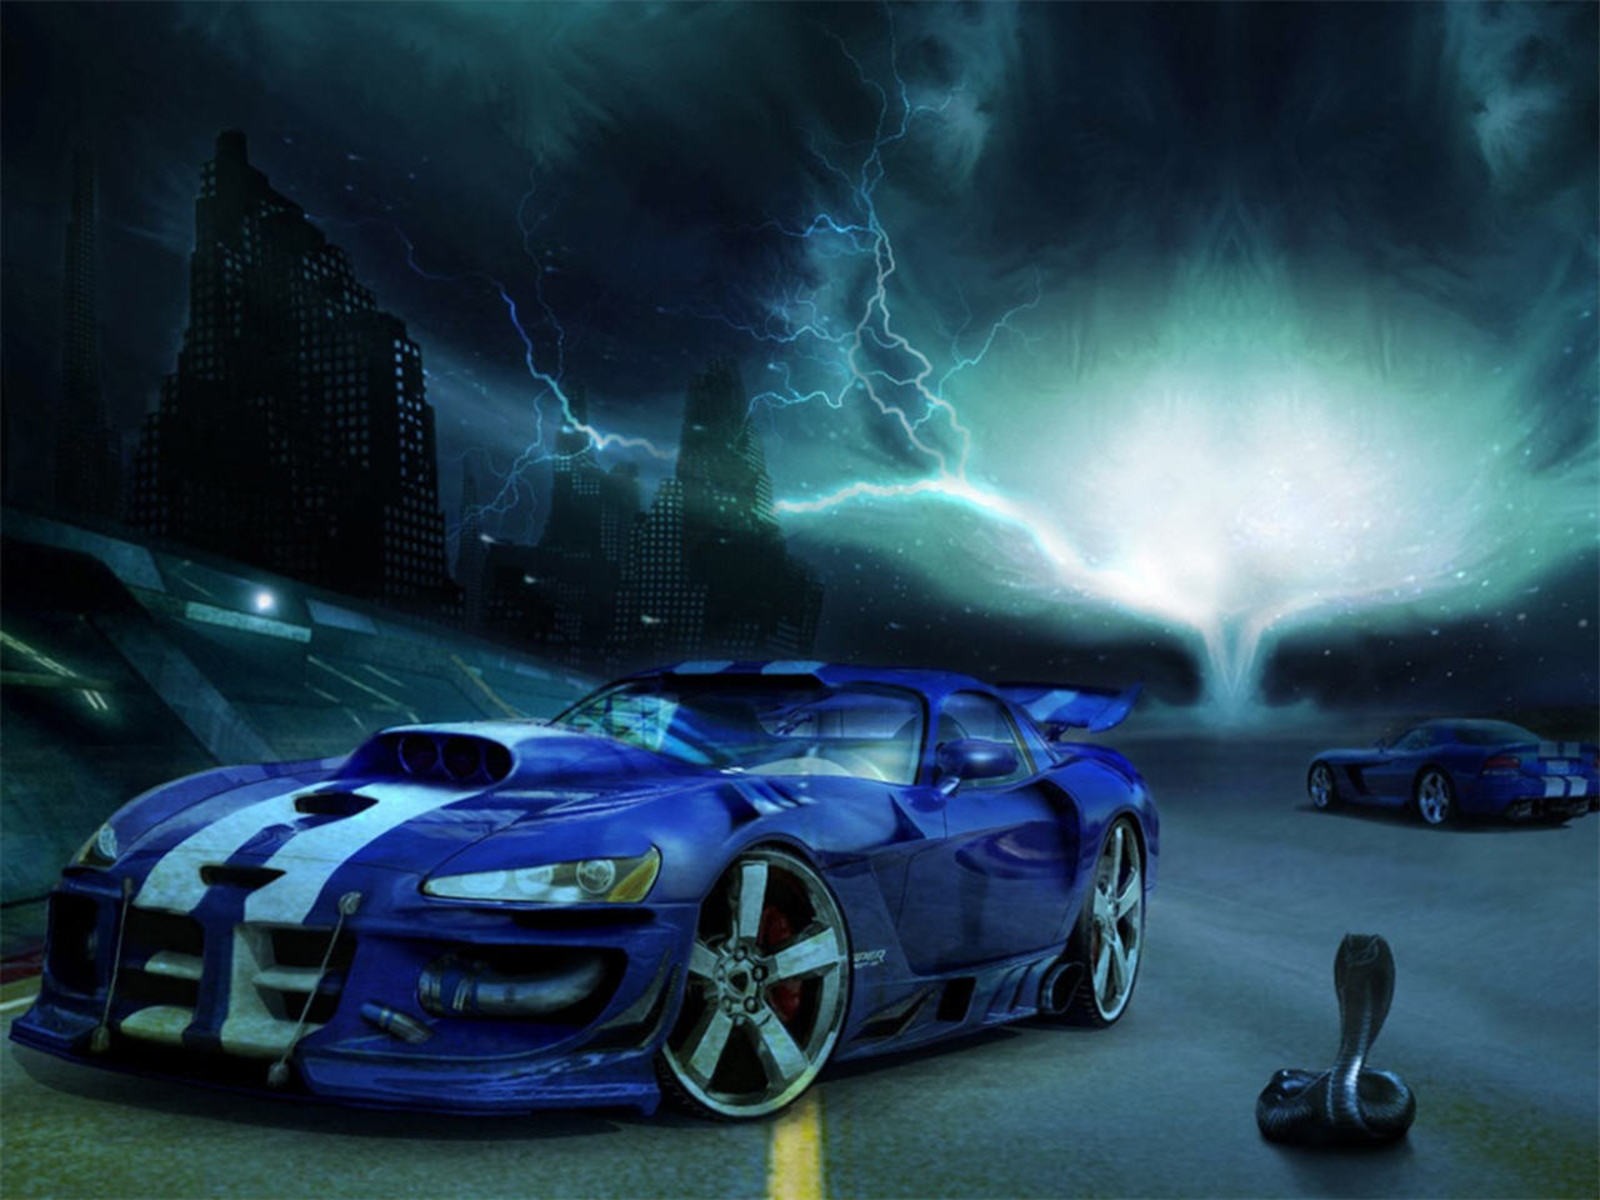 Blue Dodge Viper Wallpaper 5615 Hd Wallpapers in Cars   Imagescicom